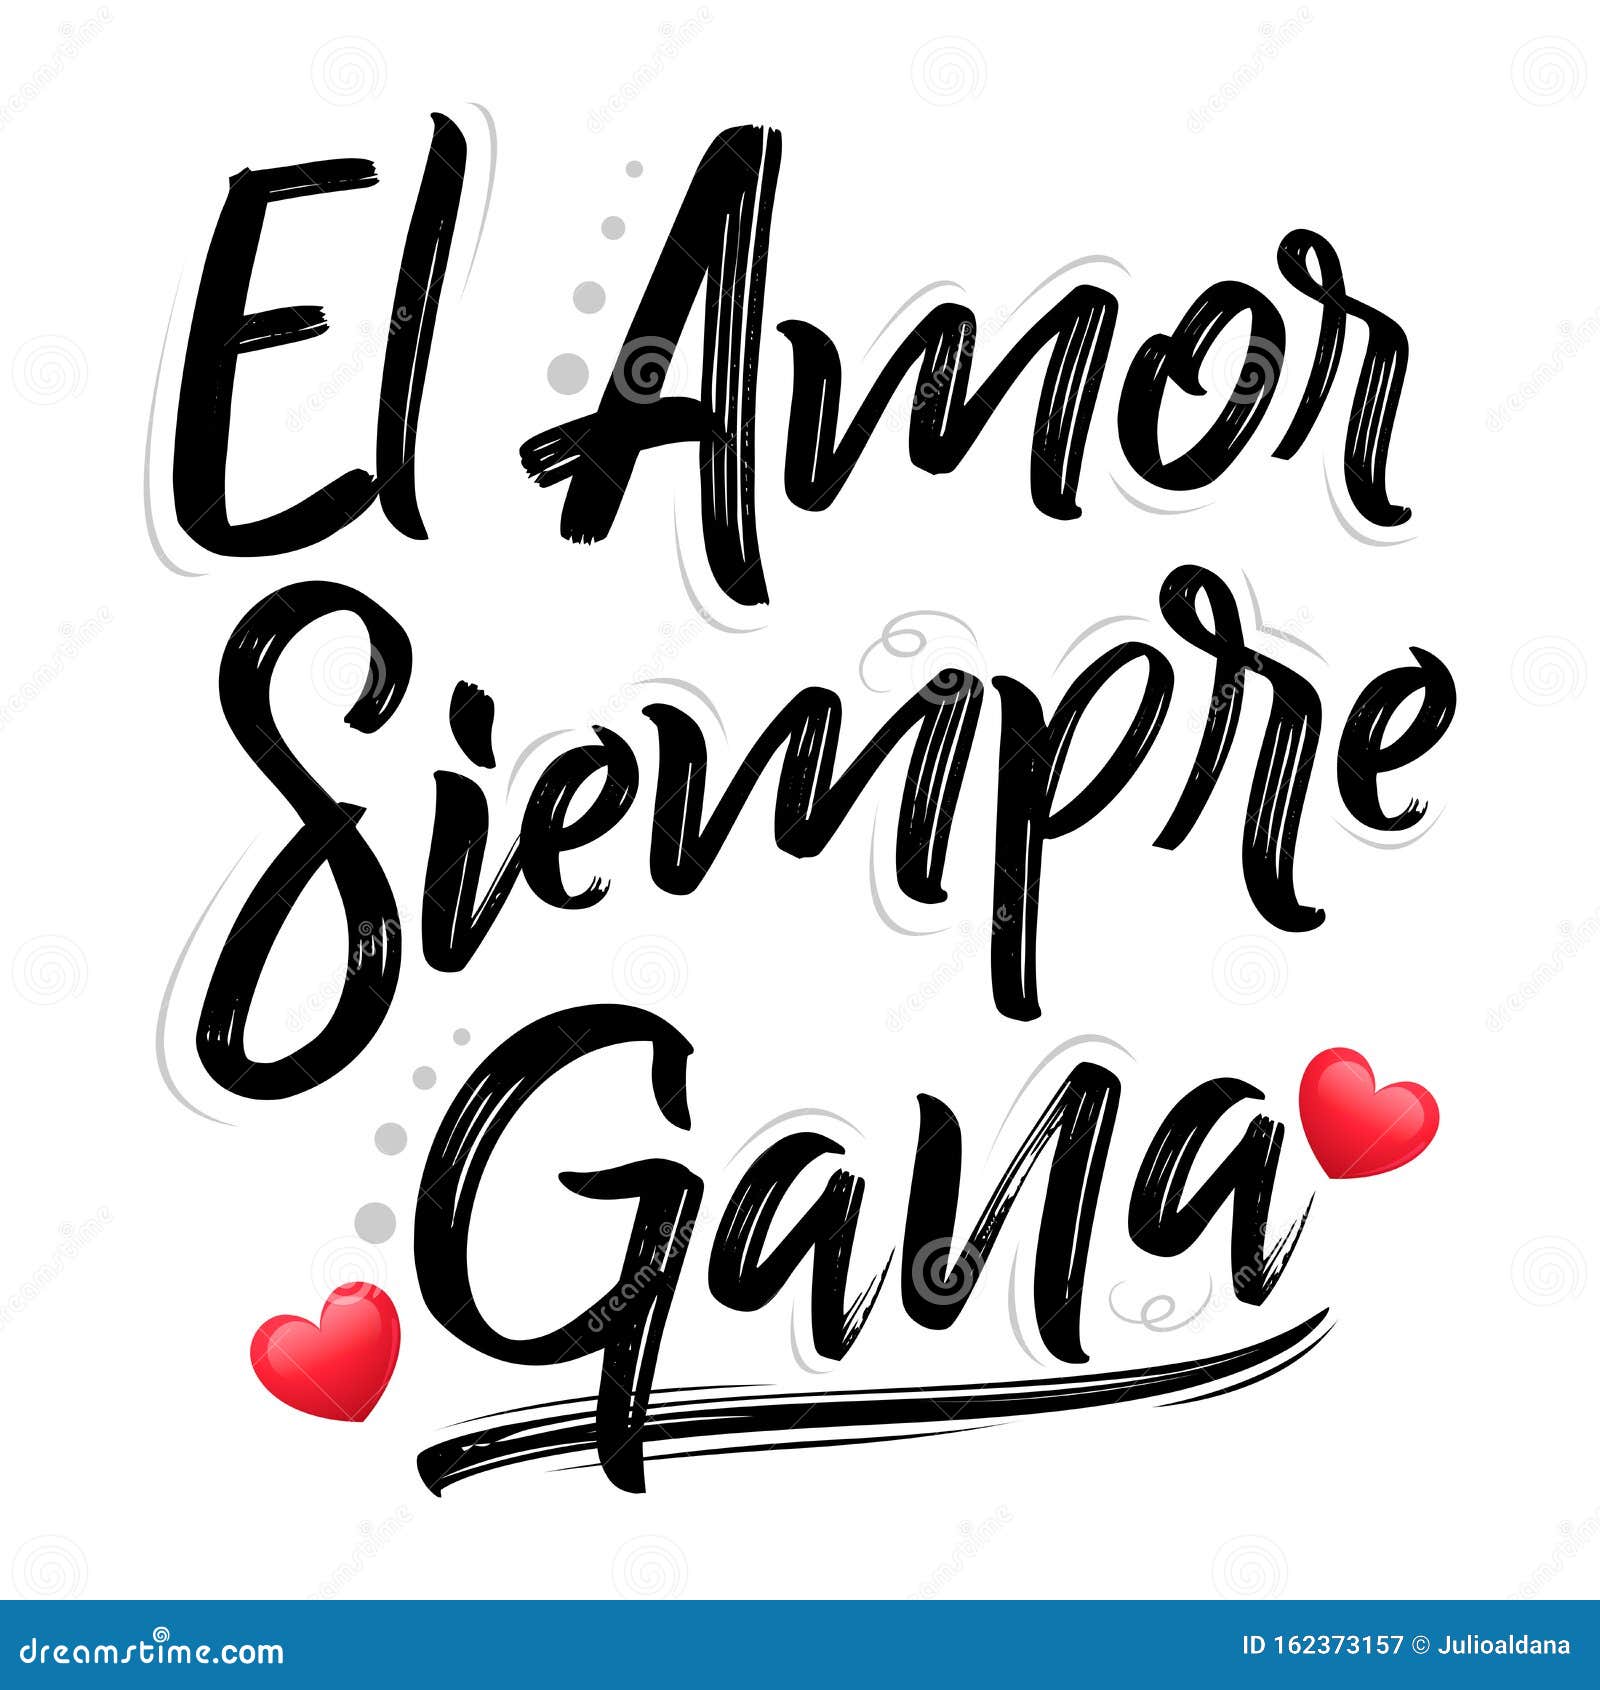 el amor siempre gana, love always wins spanish text,  lettering .